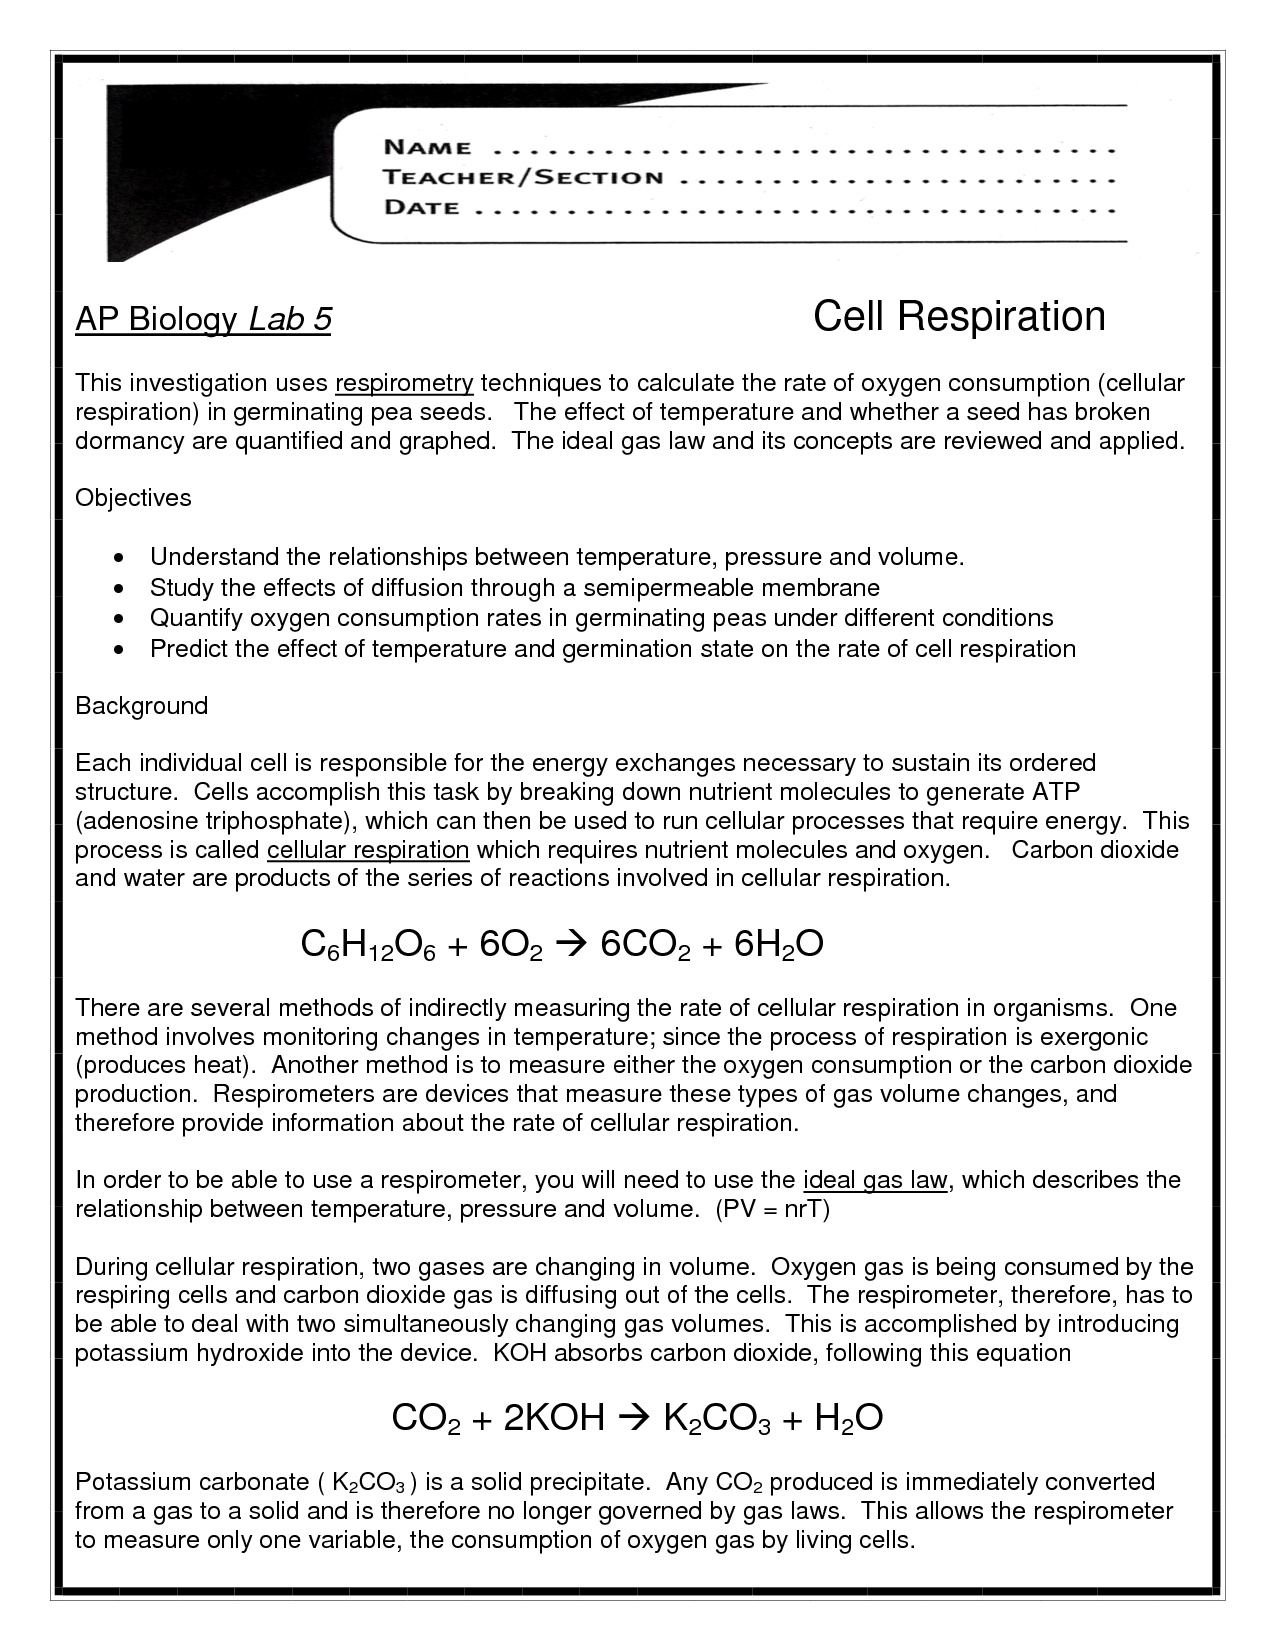 AP Biology Cellular Respiration Worksheet Image